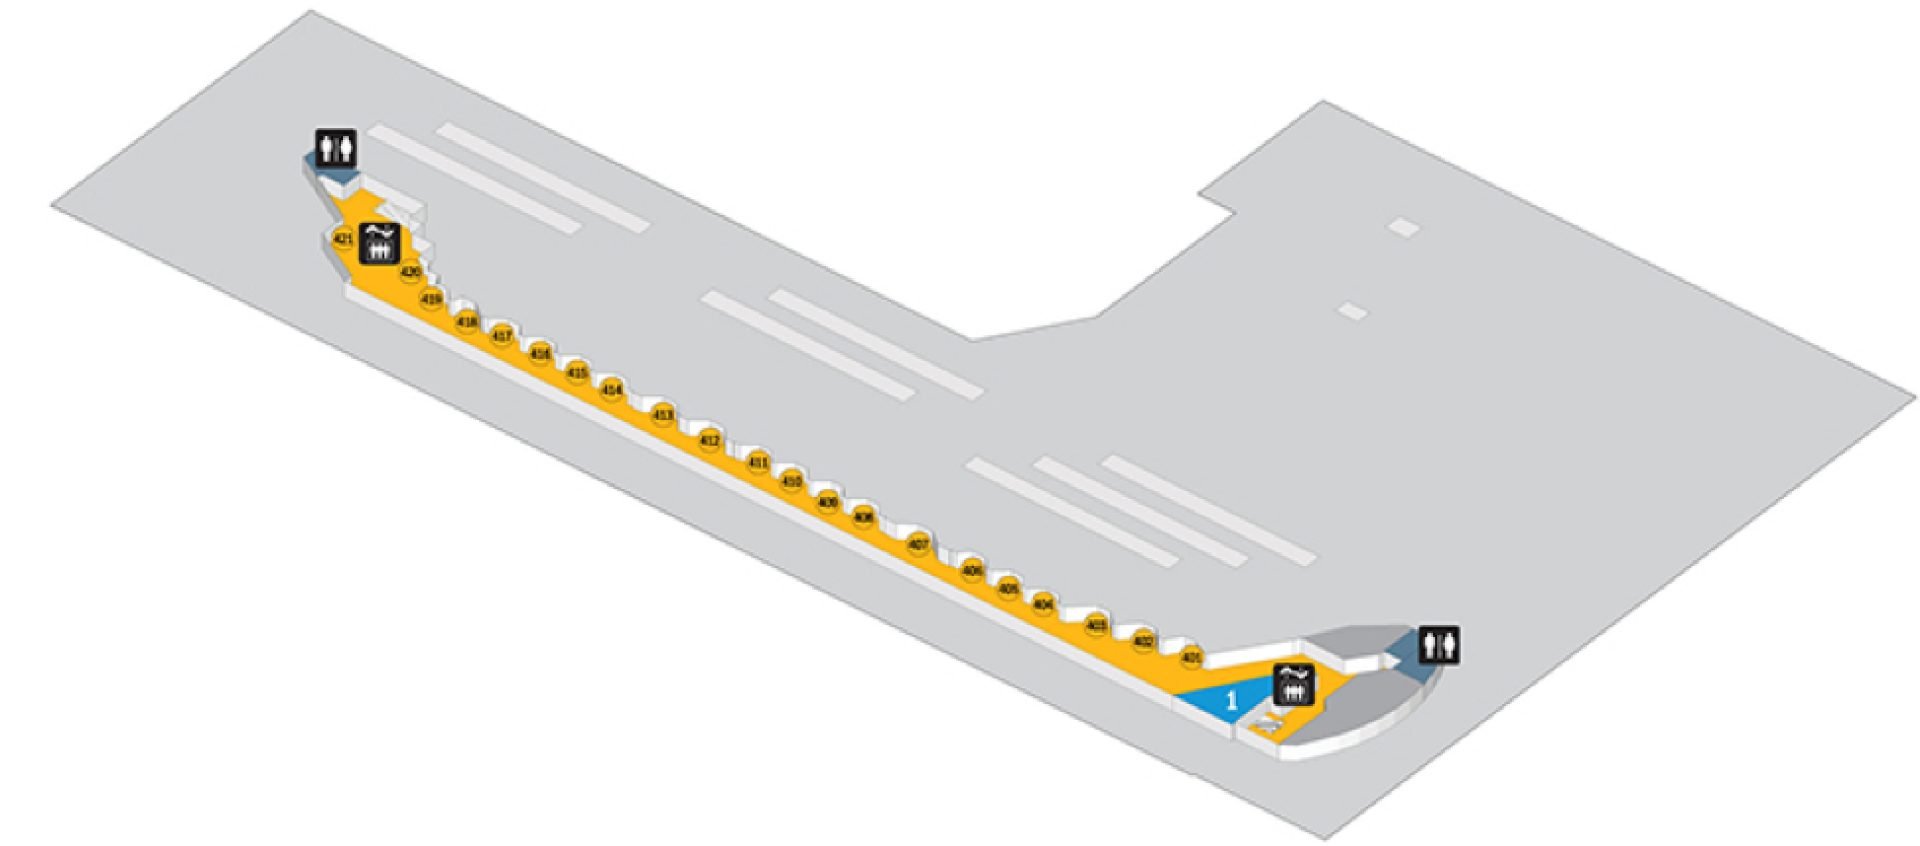 Port Authority Bus Terminal Interior Map - Level 4